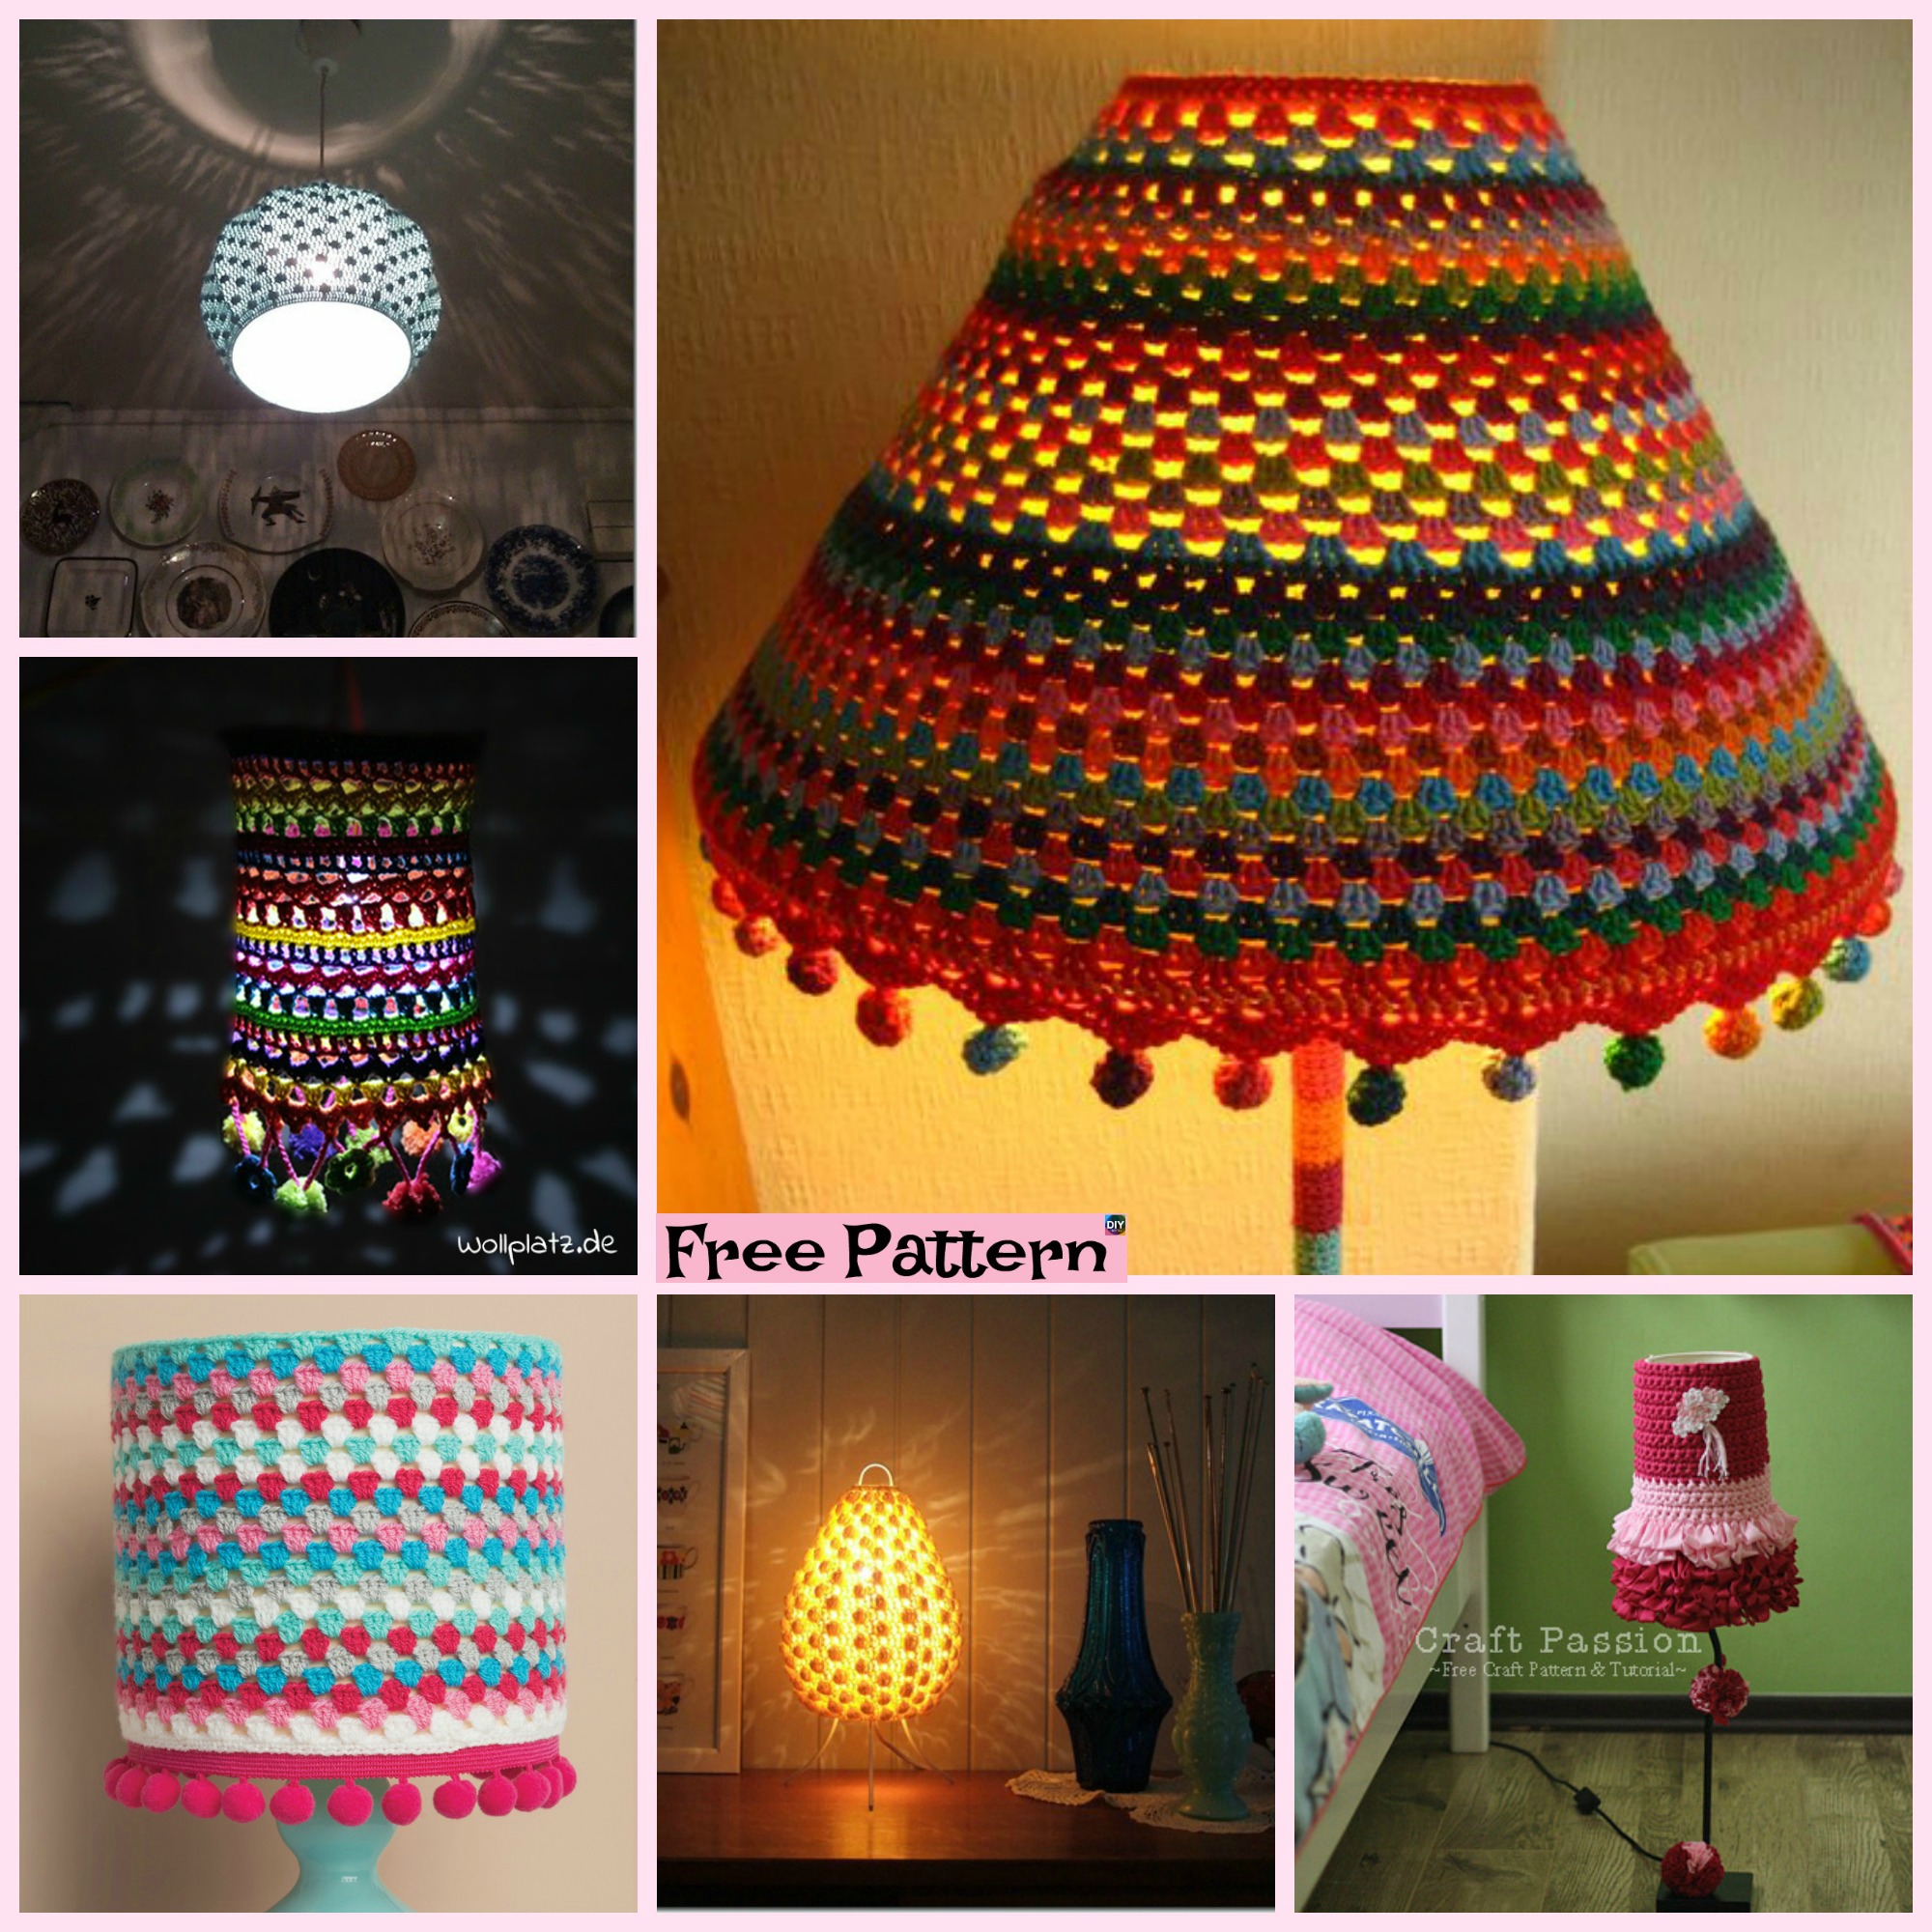 20 Crochet Lamp Shade Free Pattern For 2020  Crochet lamp, Diy hanging  light, Crochet lampshade